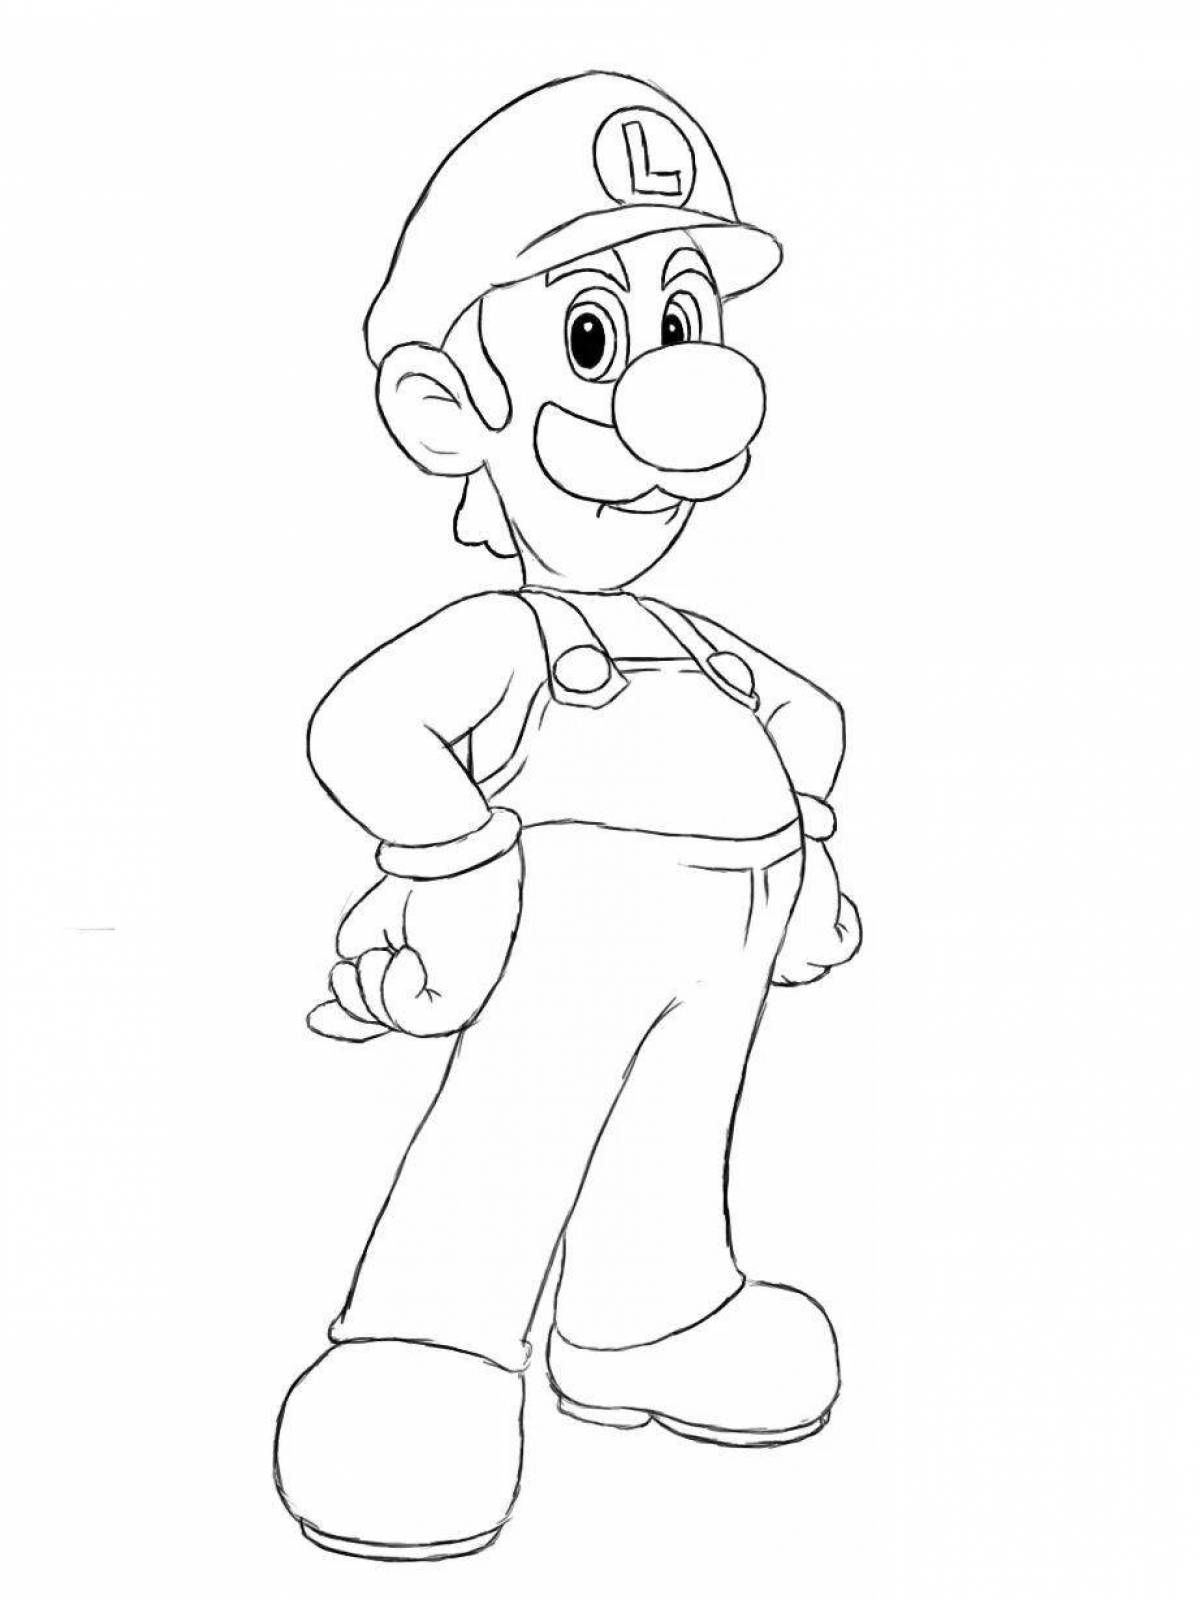 Luigi #5